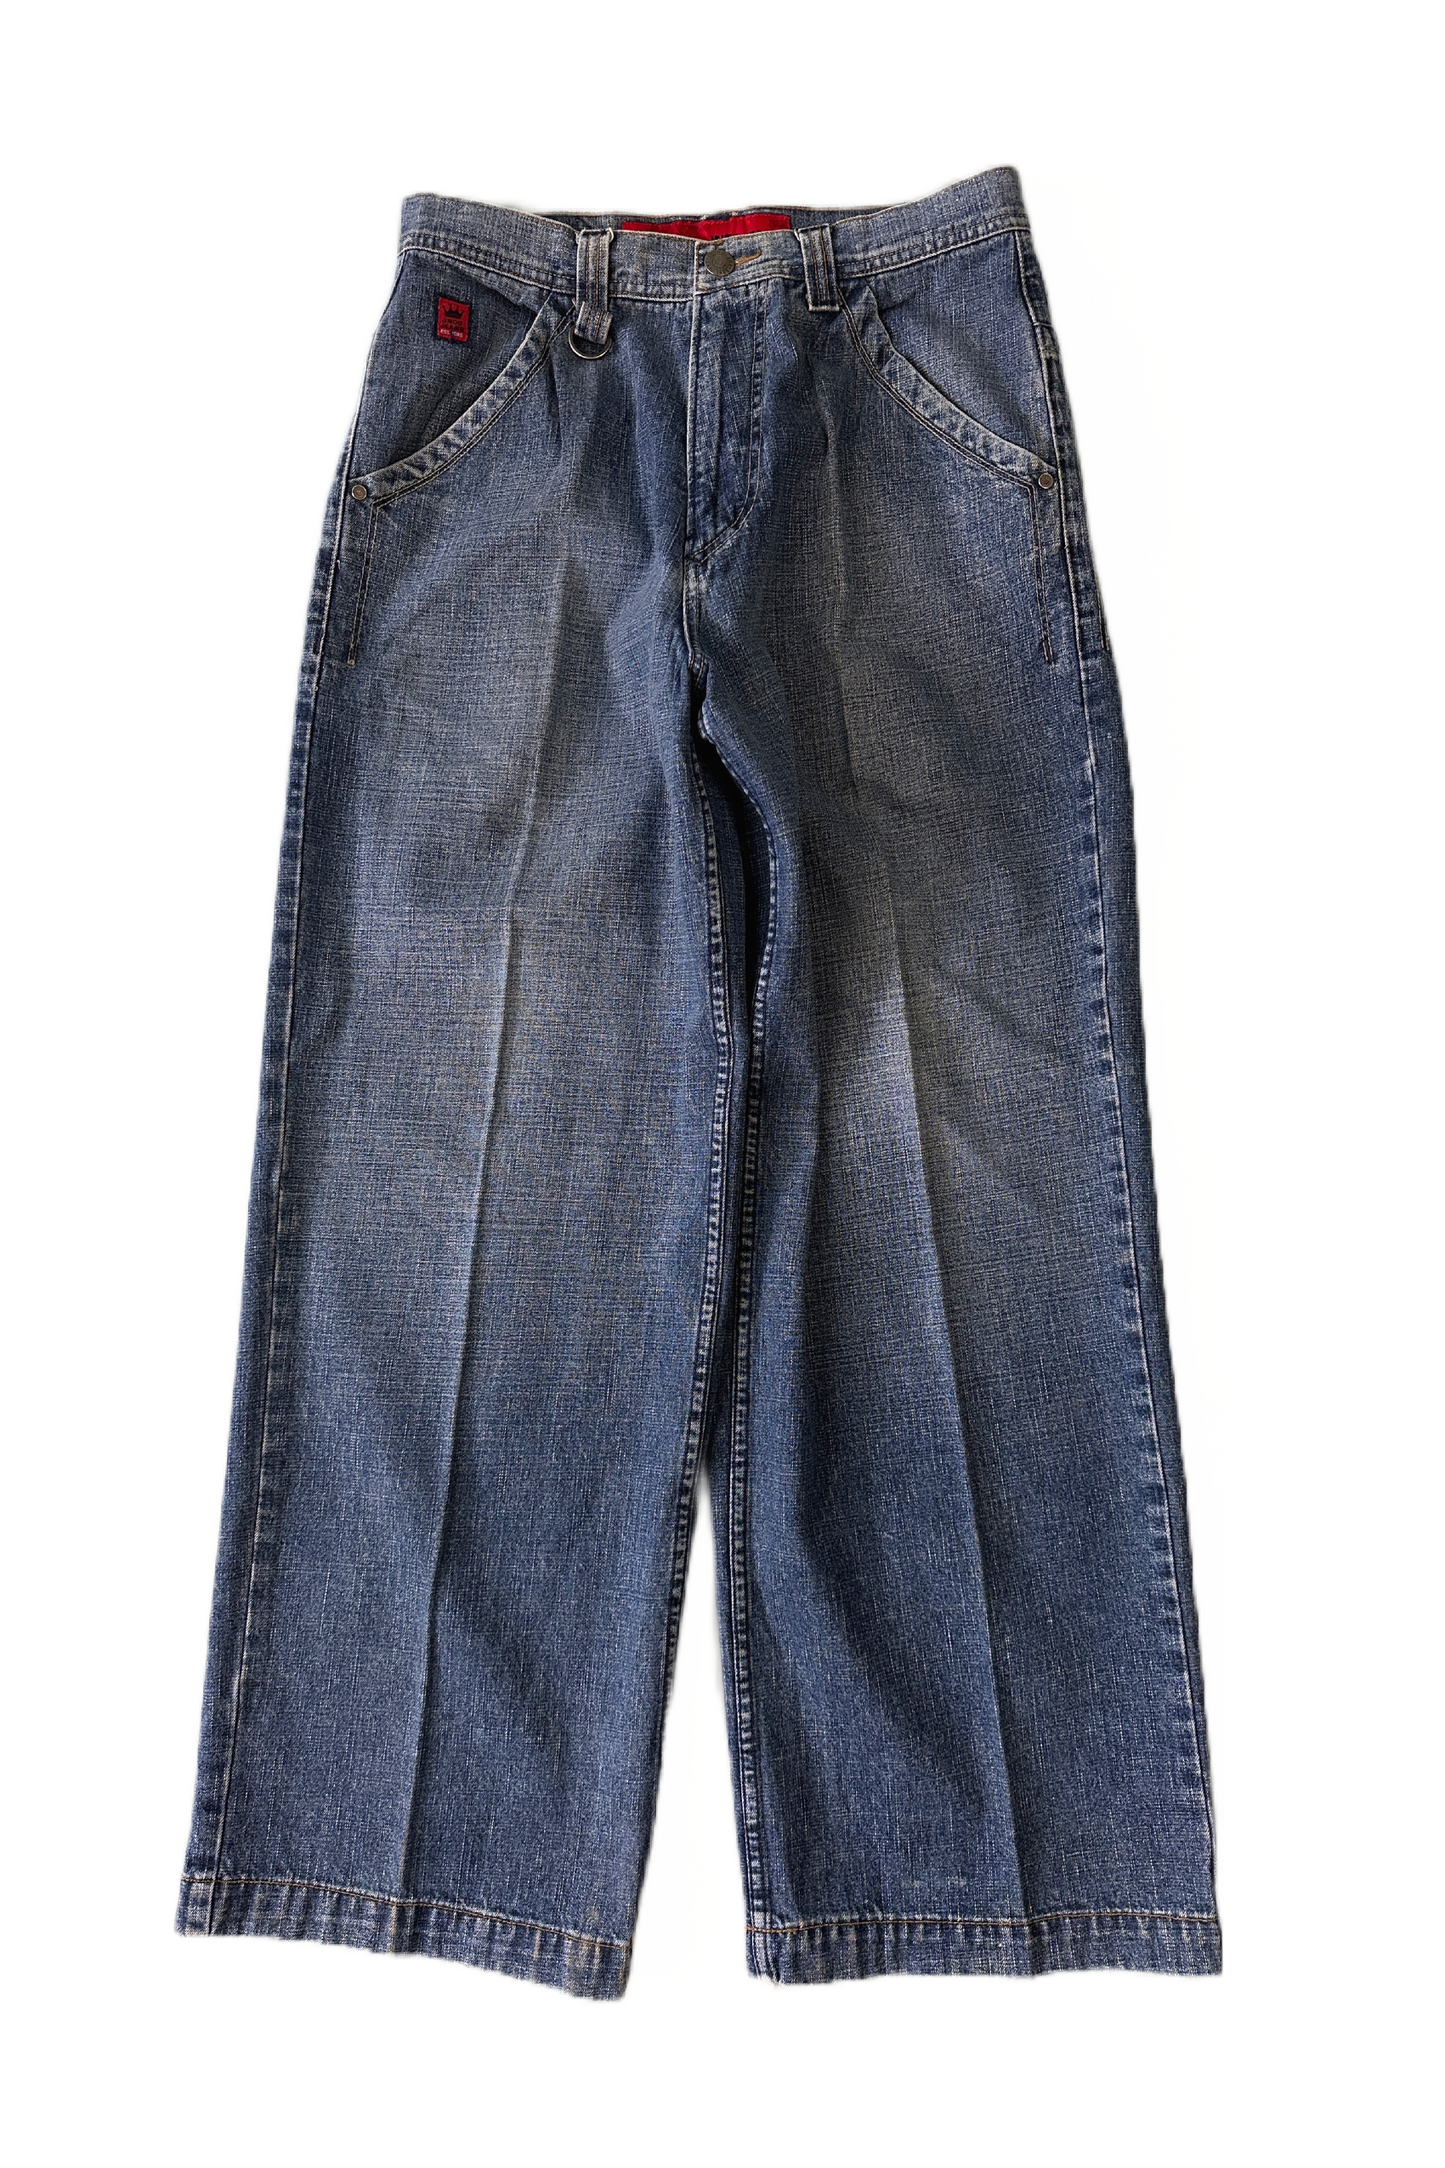 JNCO Eagle Spellout Vintage Baggy Jeans - 32 x 32